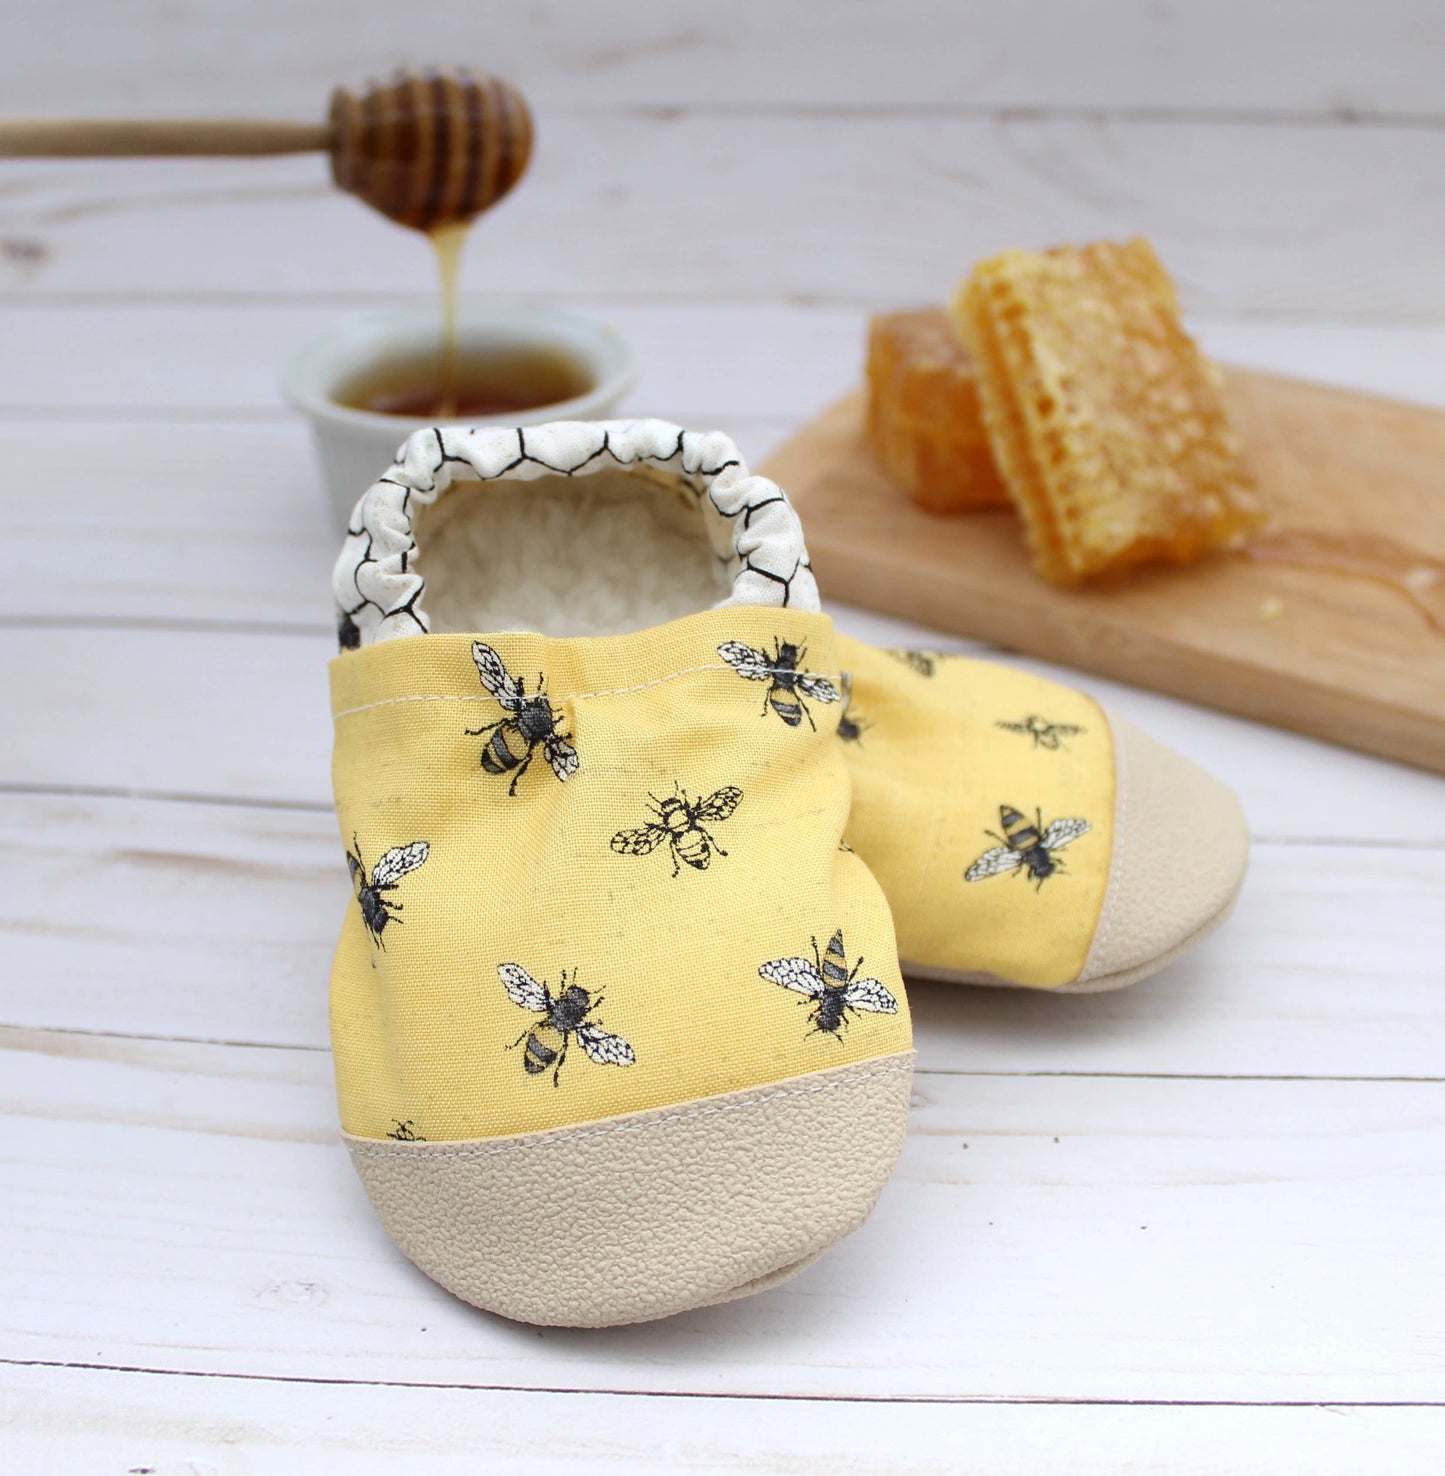 Honey Bee Baby Shoes